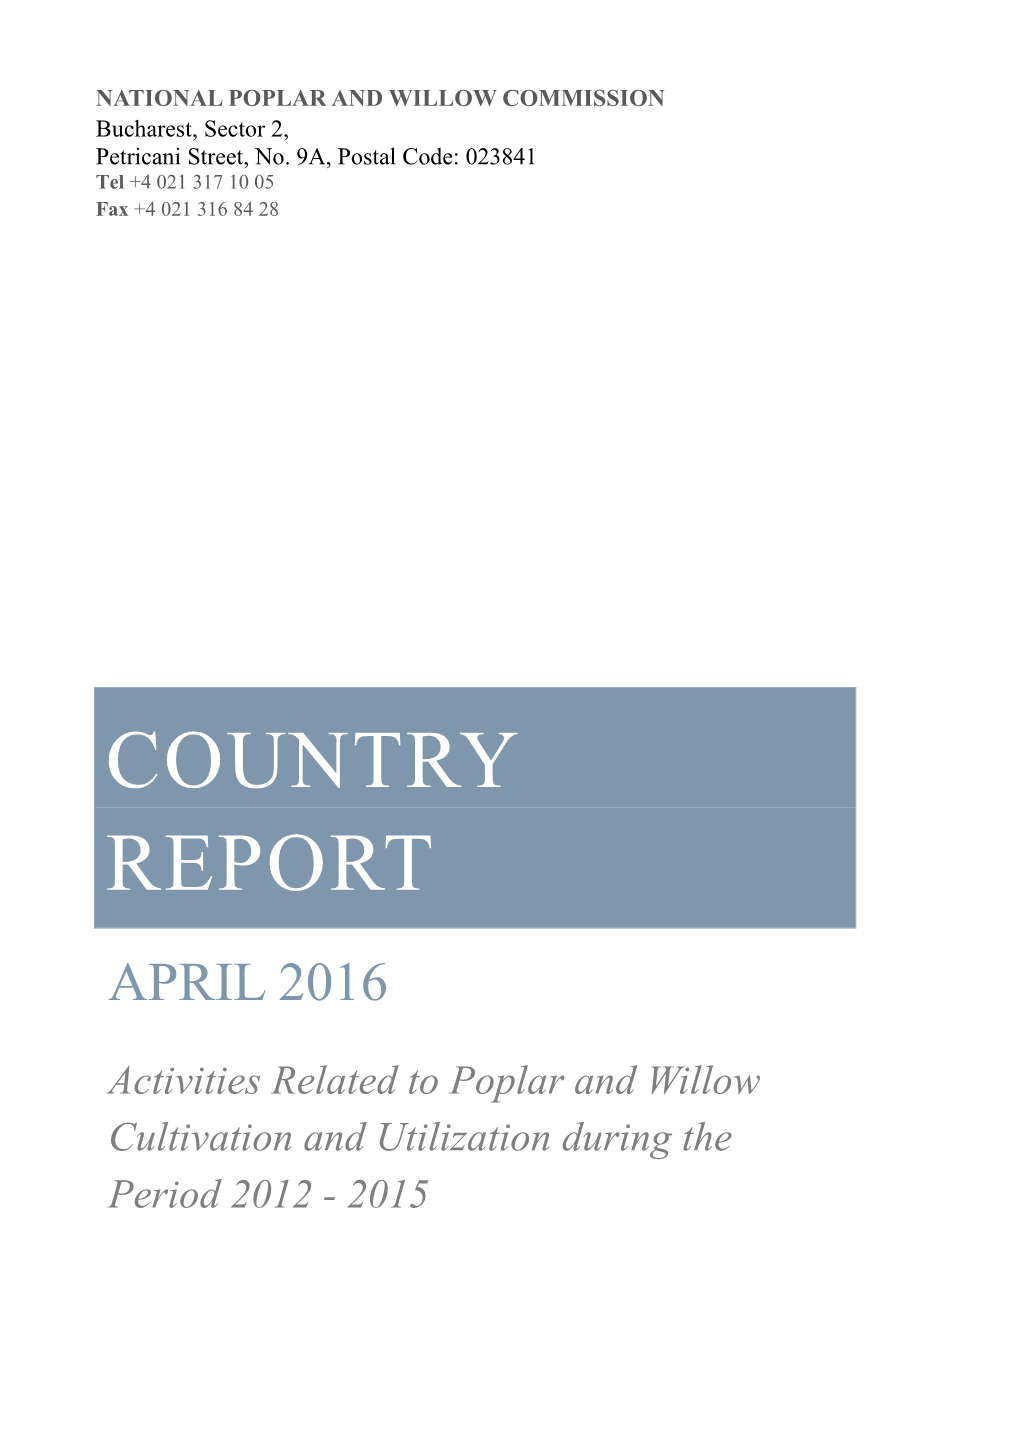 Country Progress Report